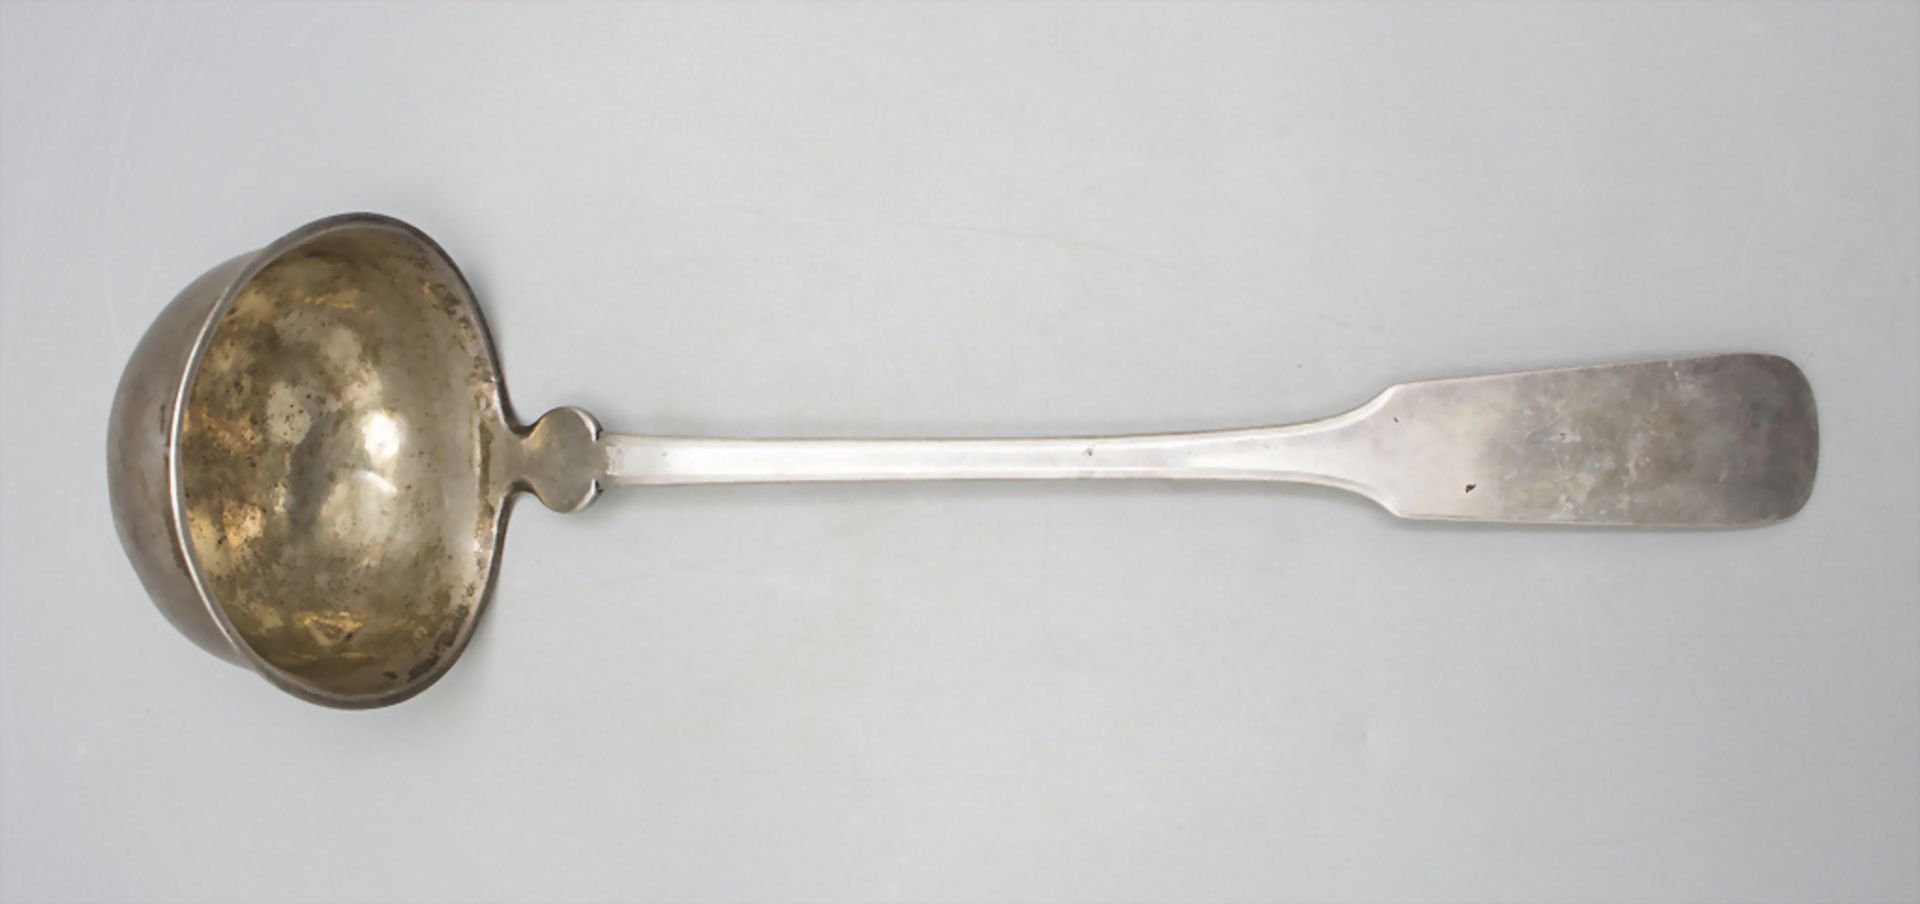 Silberkelle / A silver ladle, Heilsberg, Landau (Pfalz) oder Mannheim, um 1840